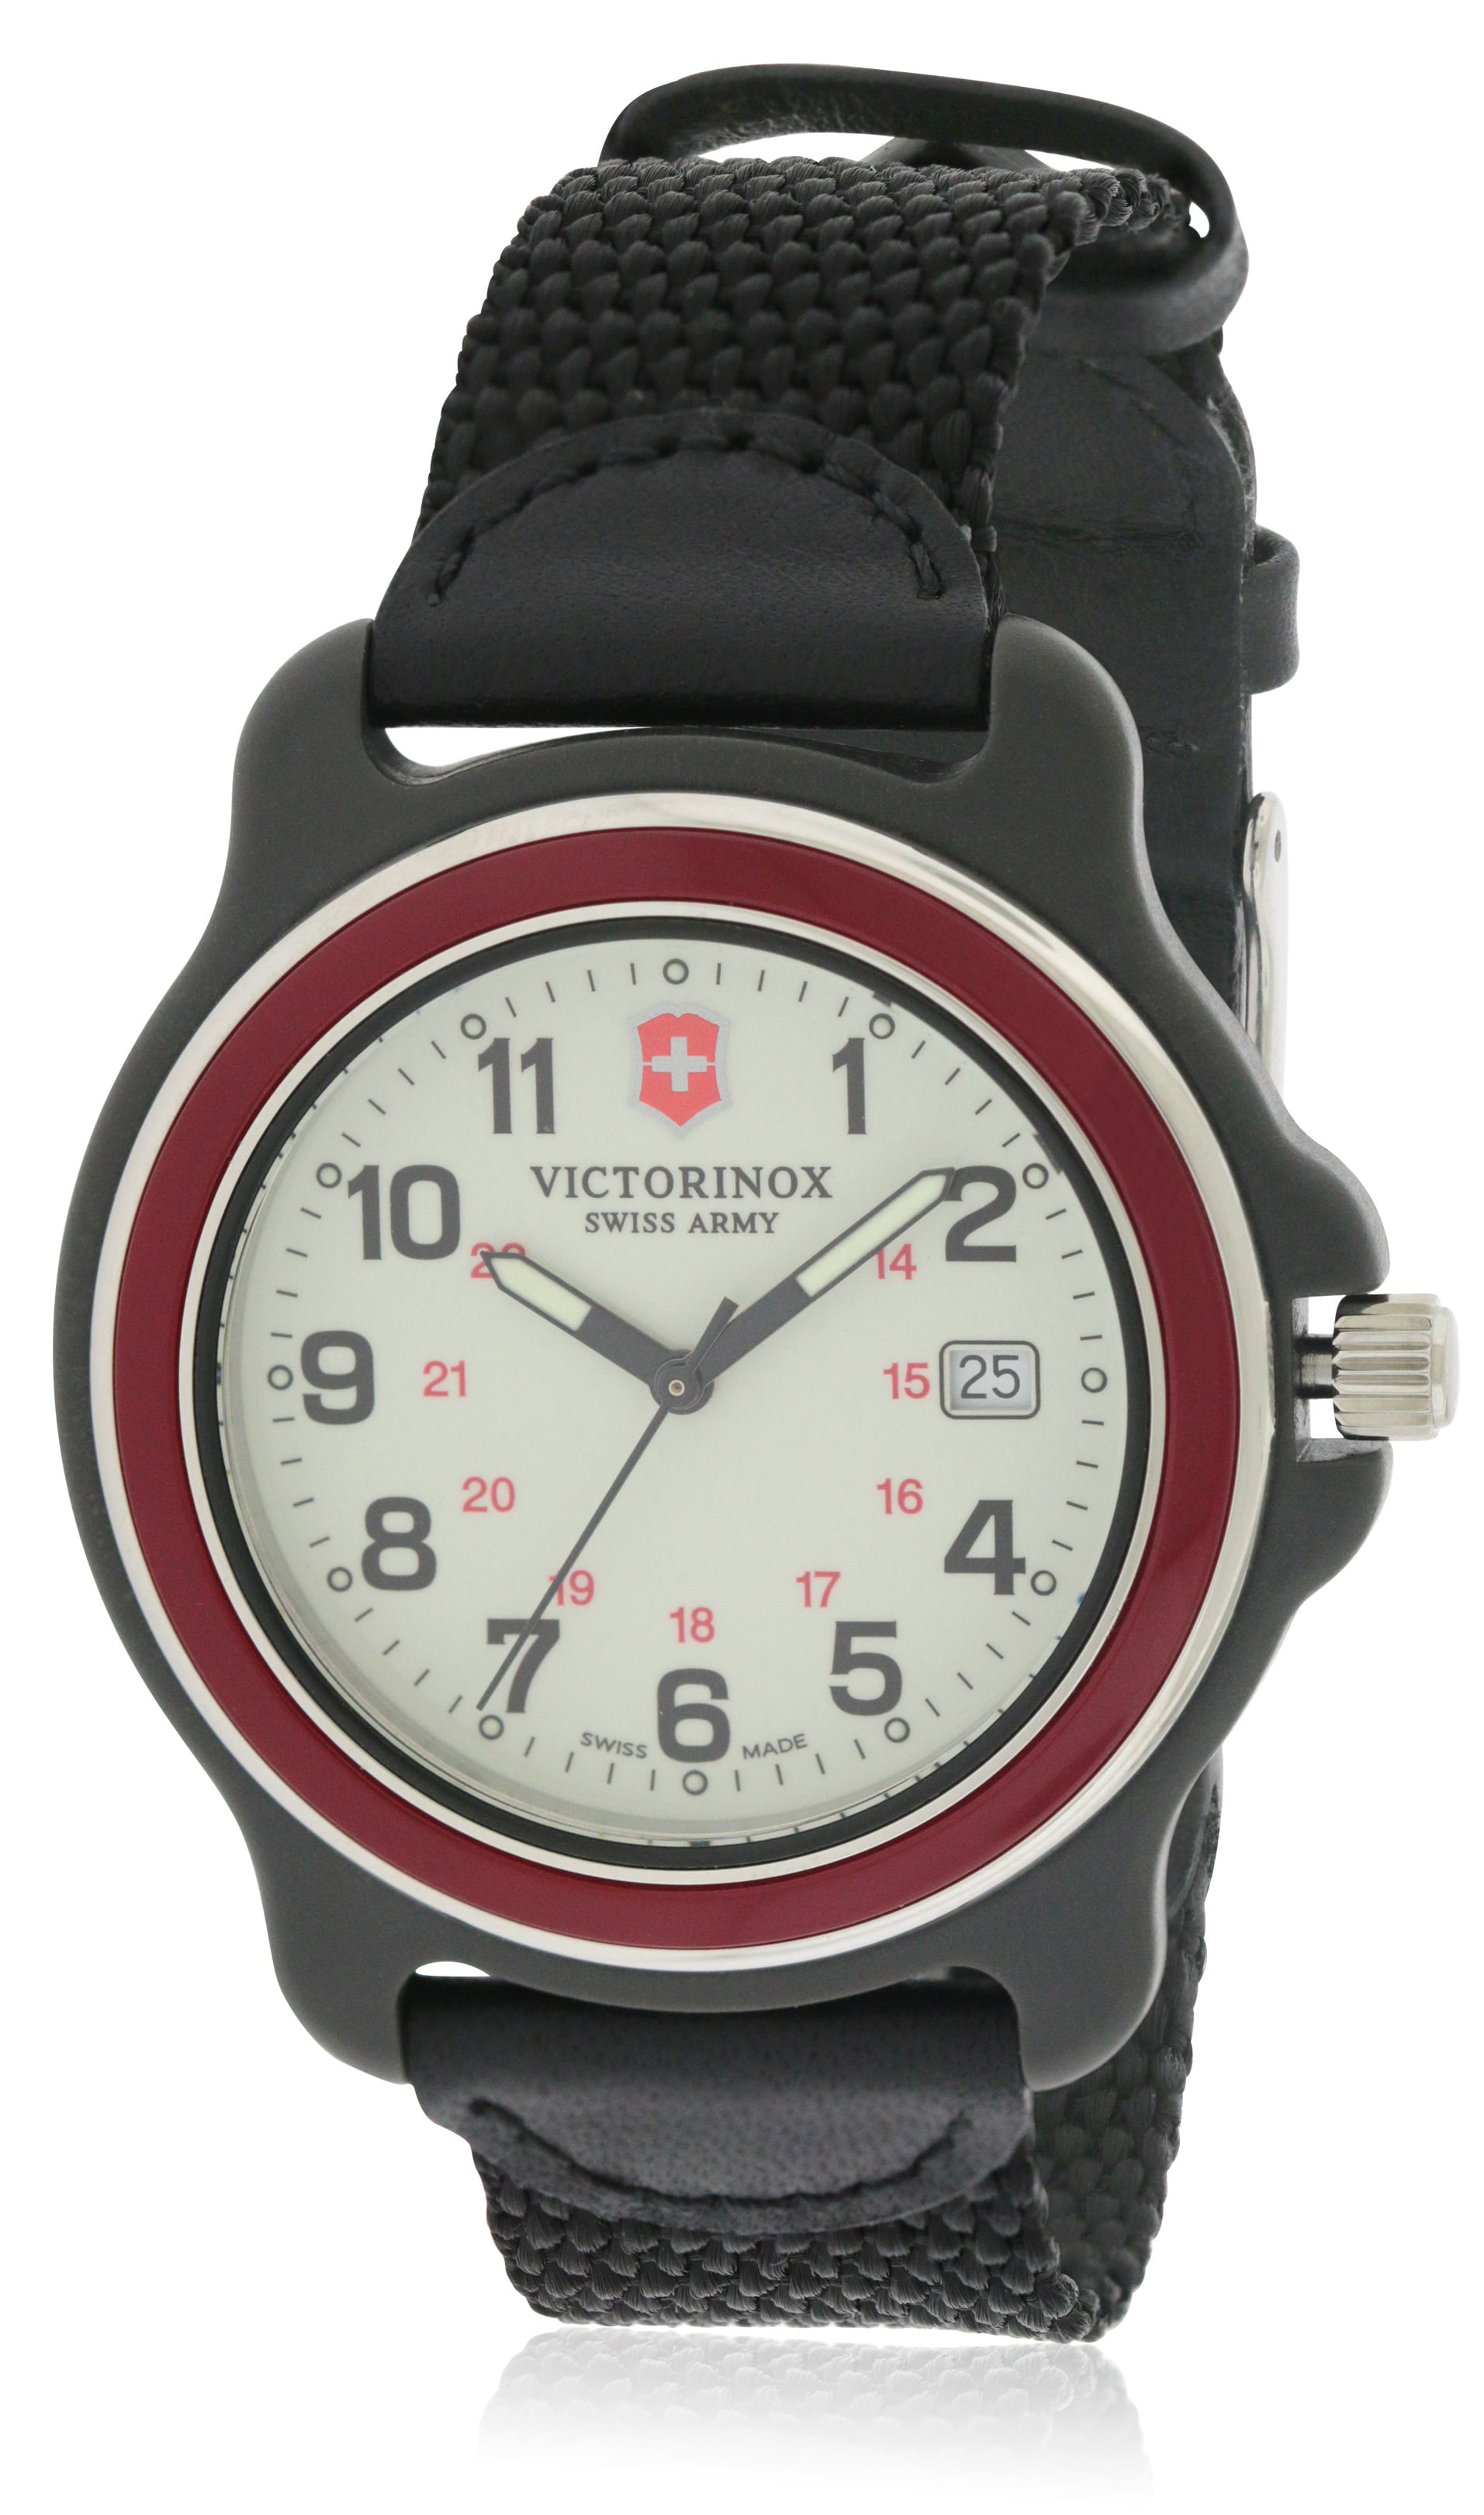 Оригинал швейцарии часы. Victorinox Swiss Army. Часы Victorinox Swiss Army. Swiss Army часы оригинал. Часы Victorinox Swiss Army Sapphire Crystal.